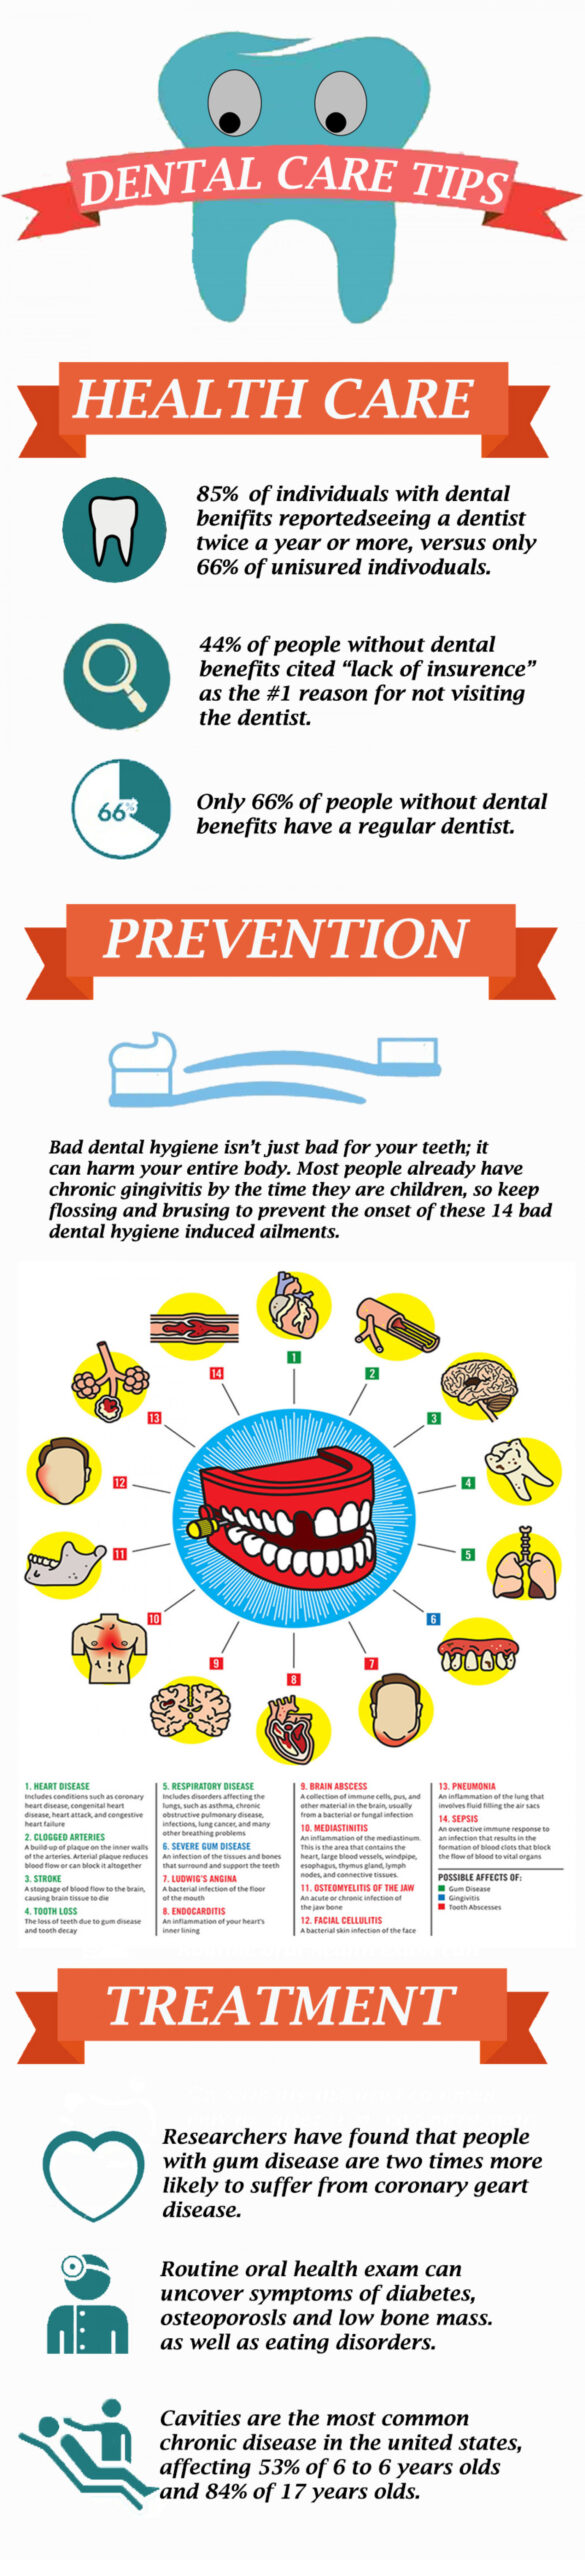 Dental care infographic set Vector | Free Download